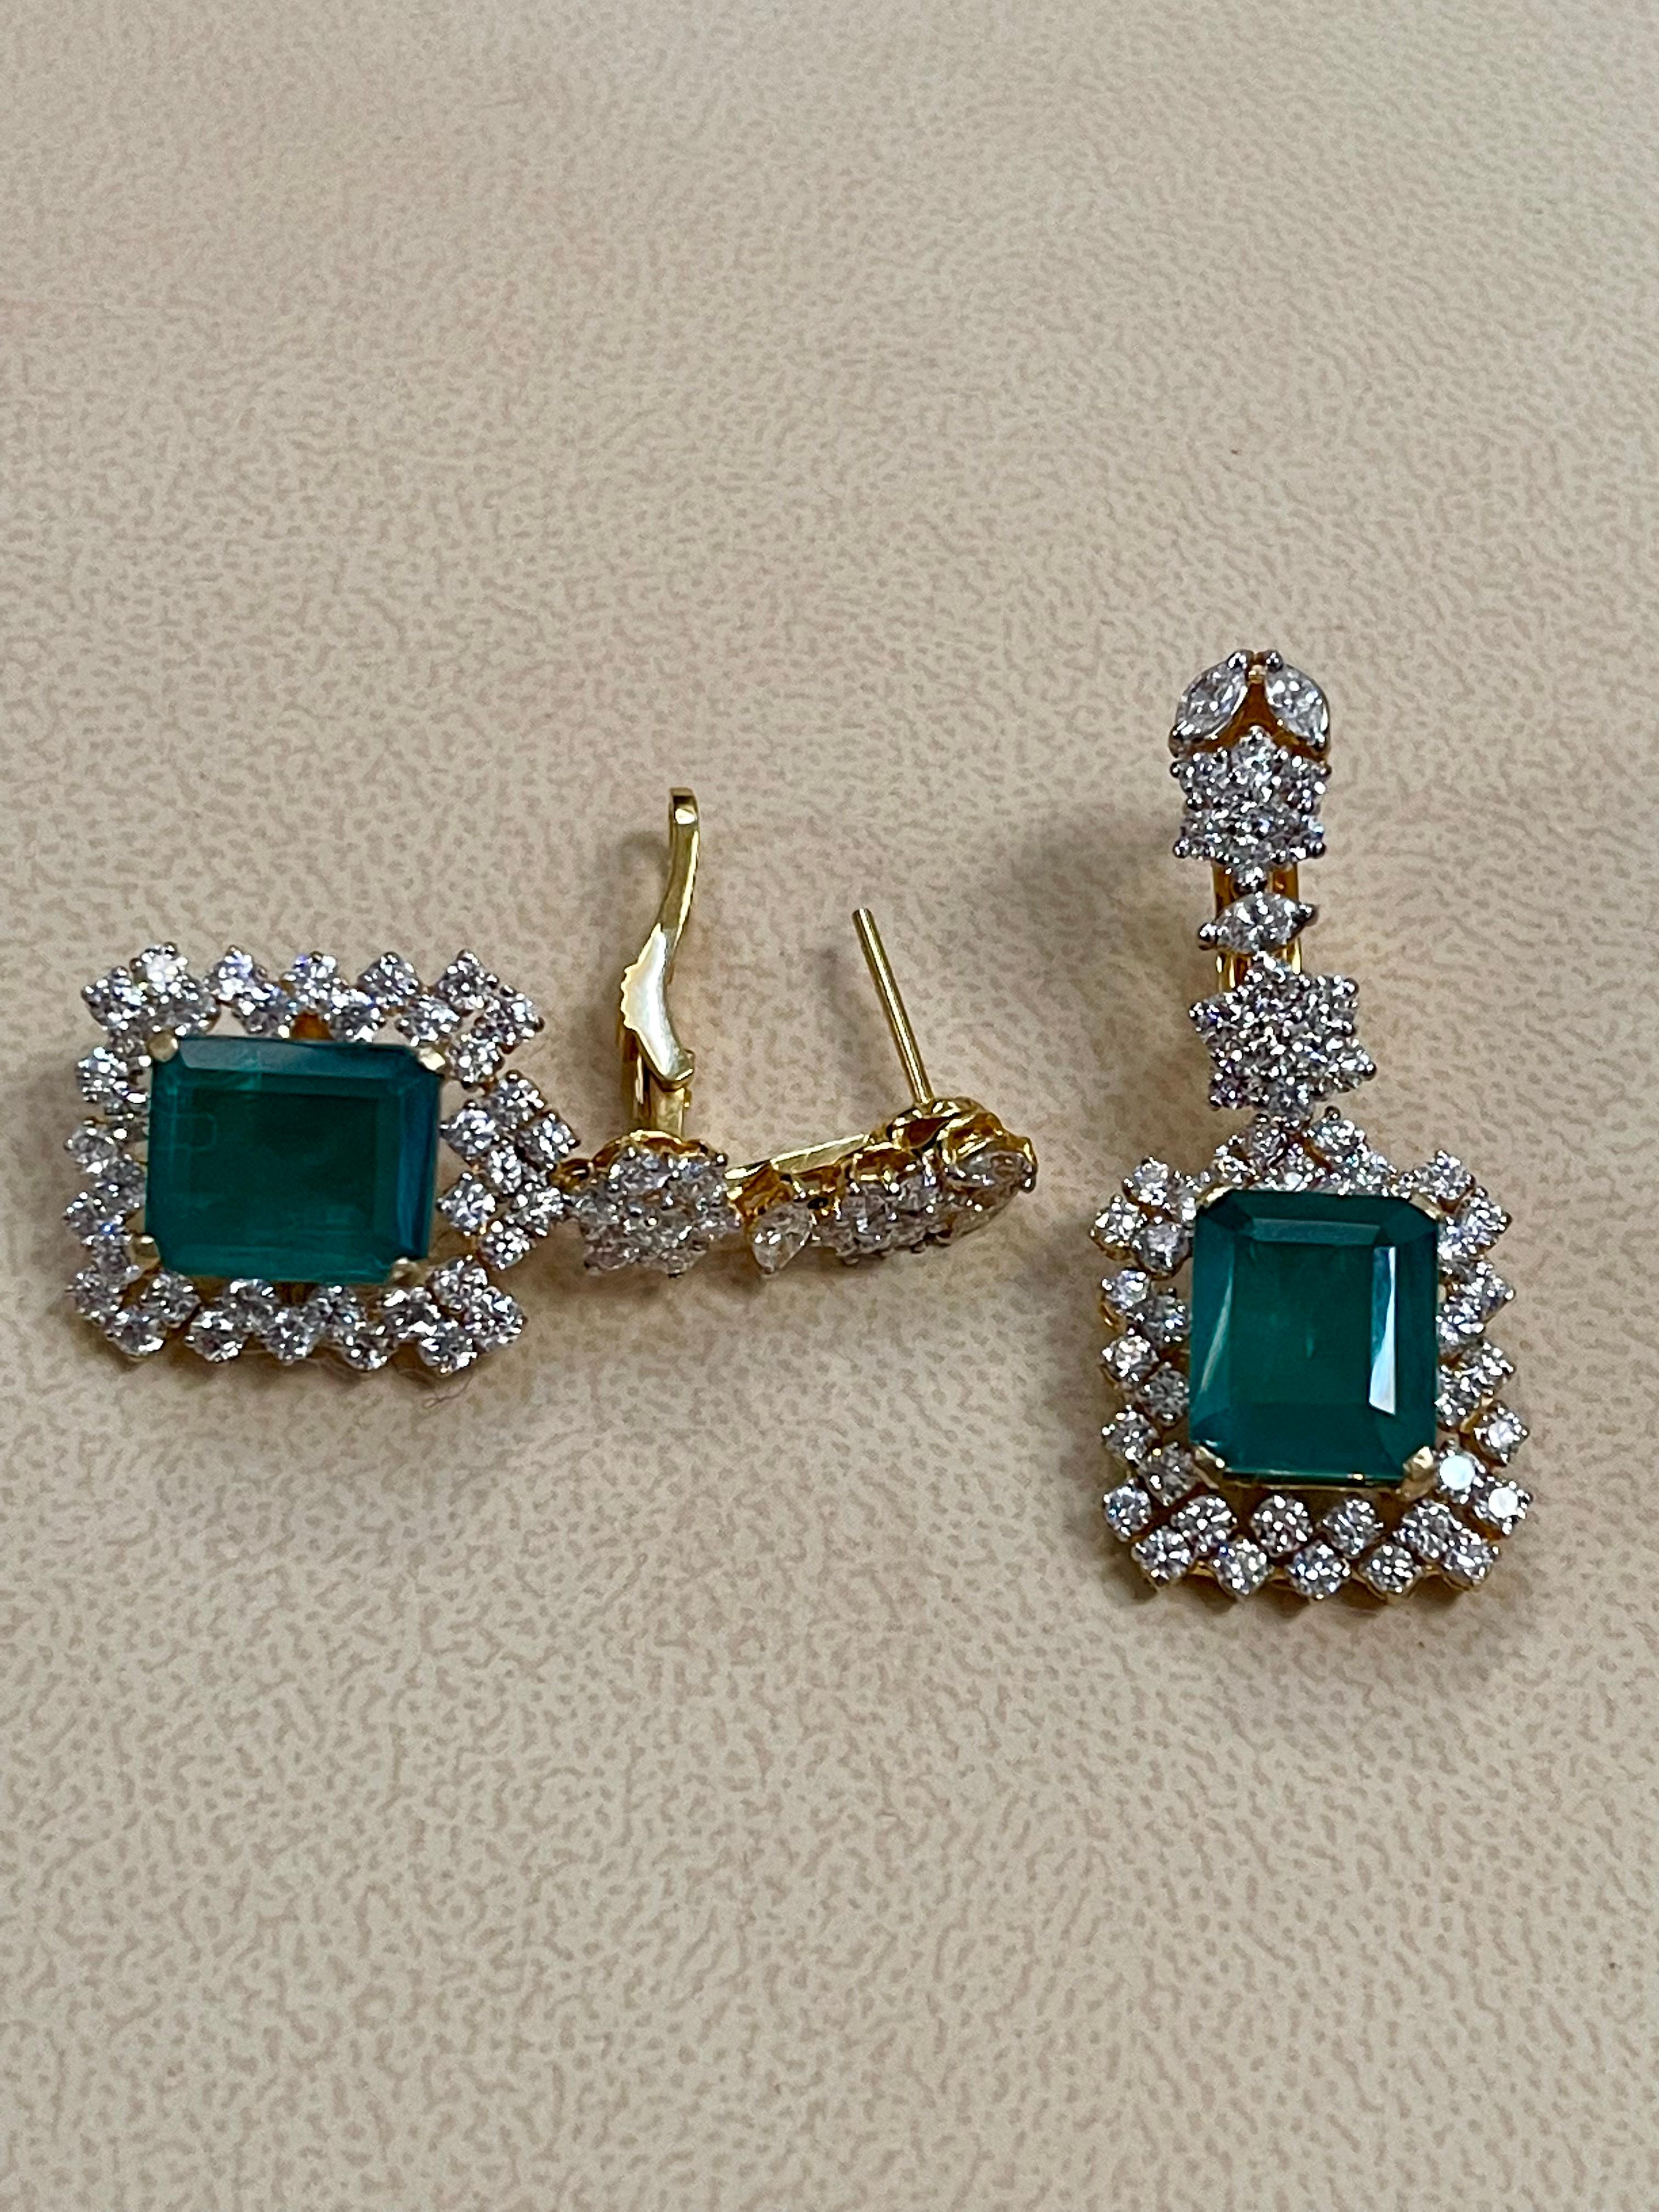 Hydro Emerald Cut Emerald, 7Ct VS Diamond Dangle/Drop Earrings 18 Kt Gold For Sale 7